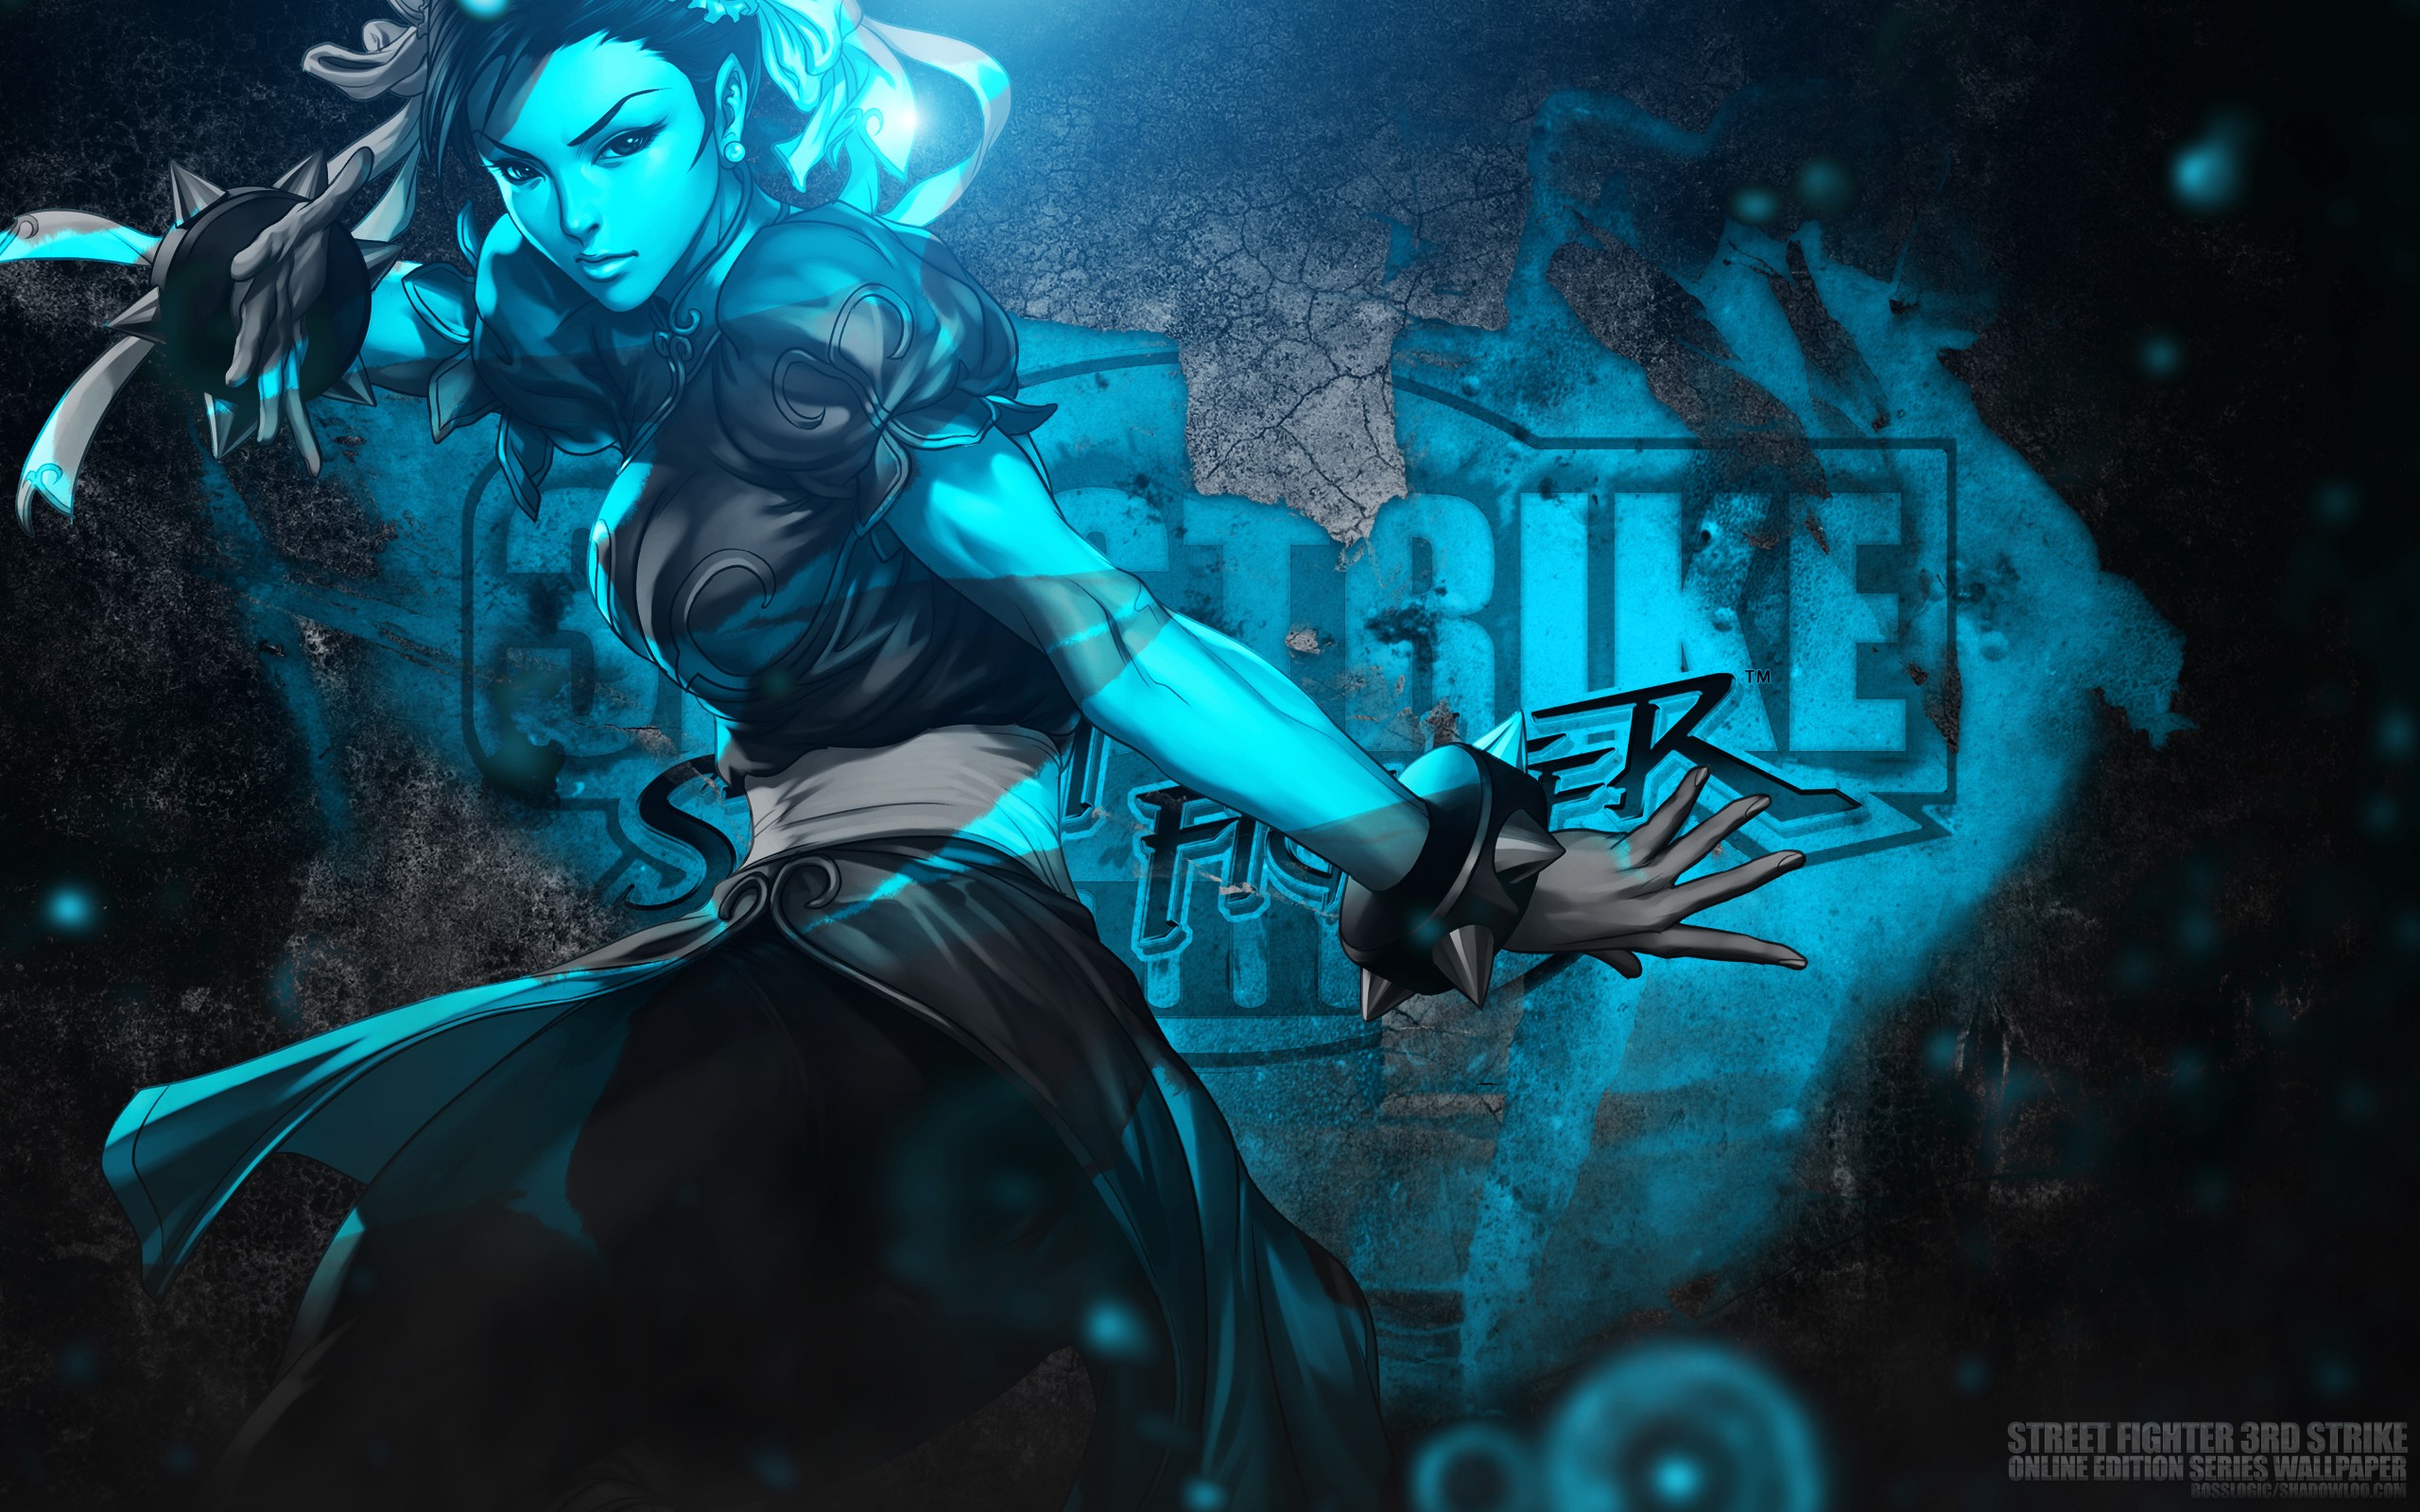 Street Fighter Image Chun Li HD Wallpaper And Background